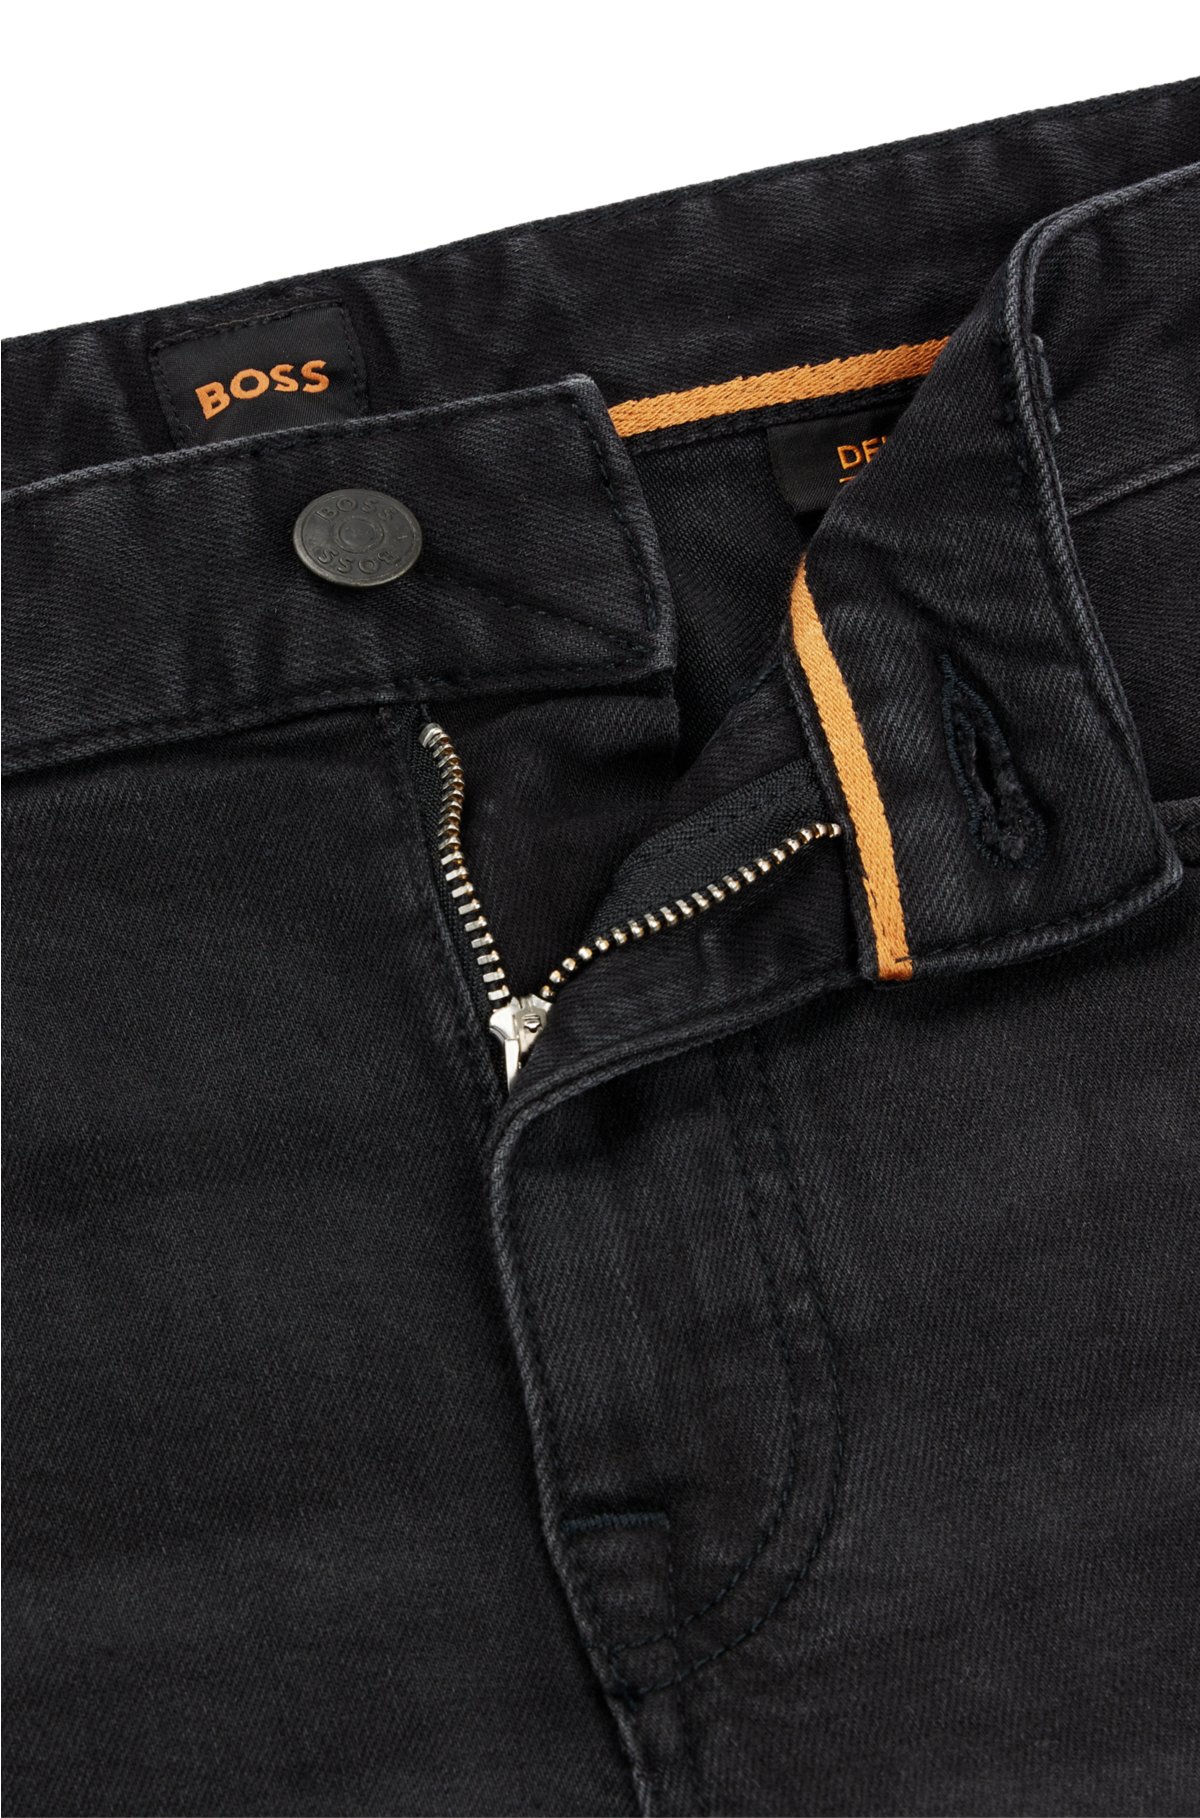 BOSS - Slim-fit jeans in black denim